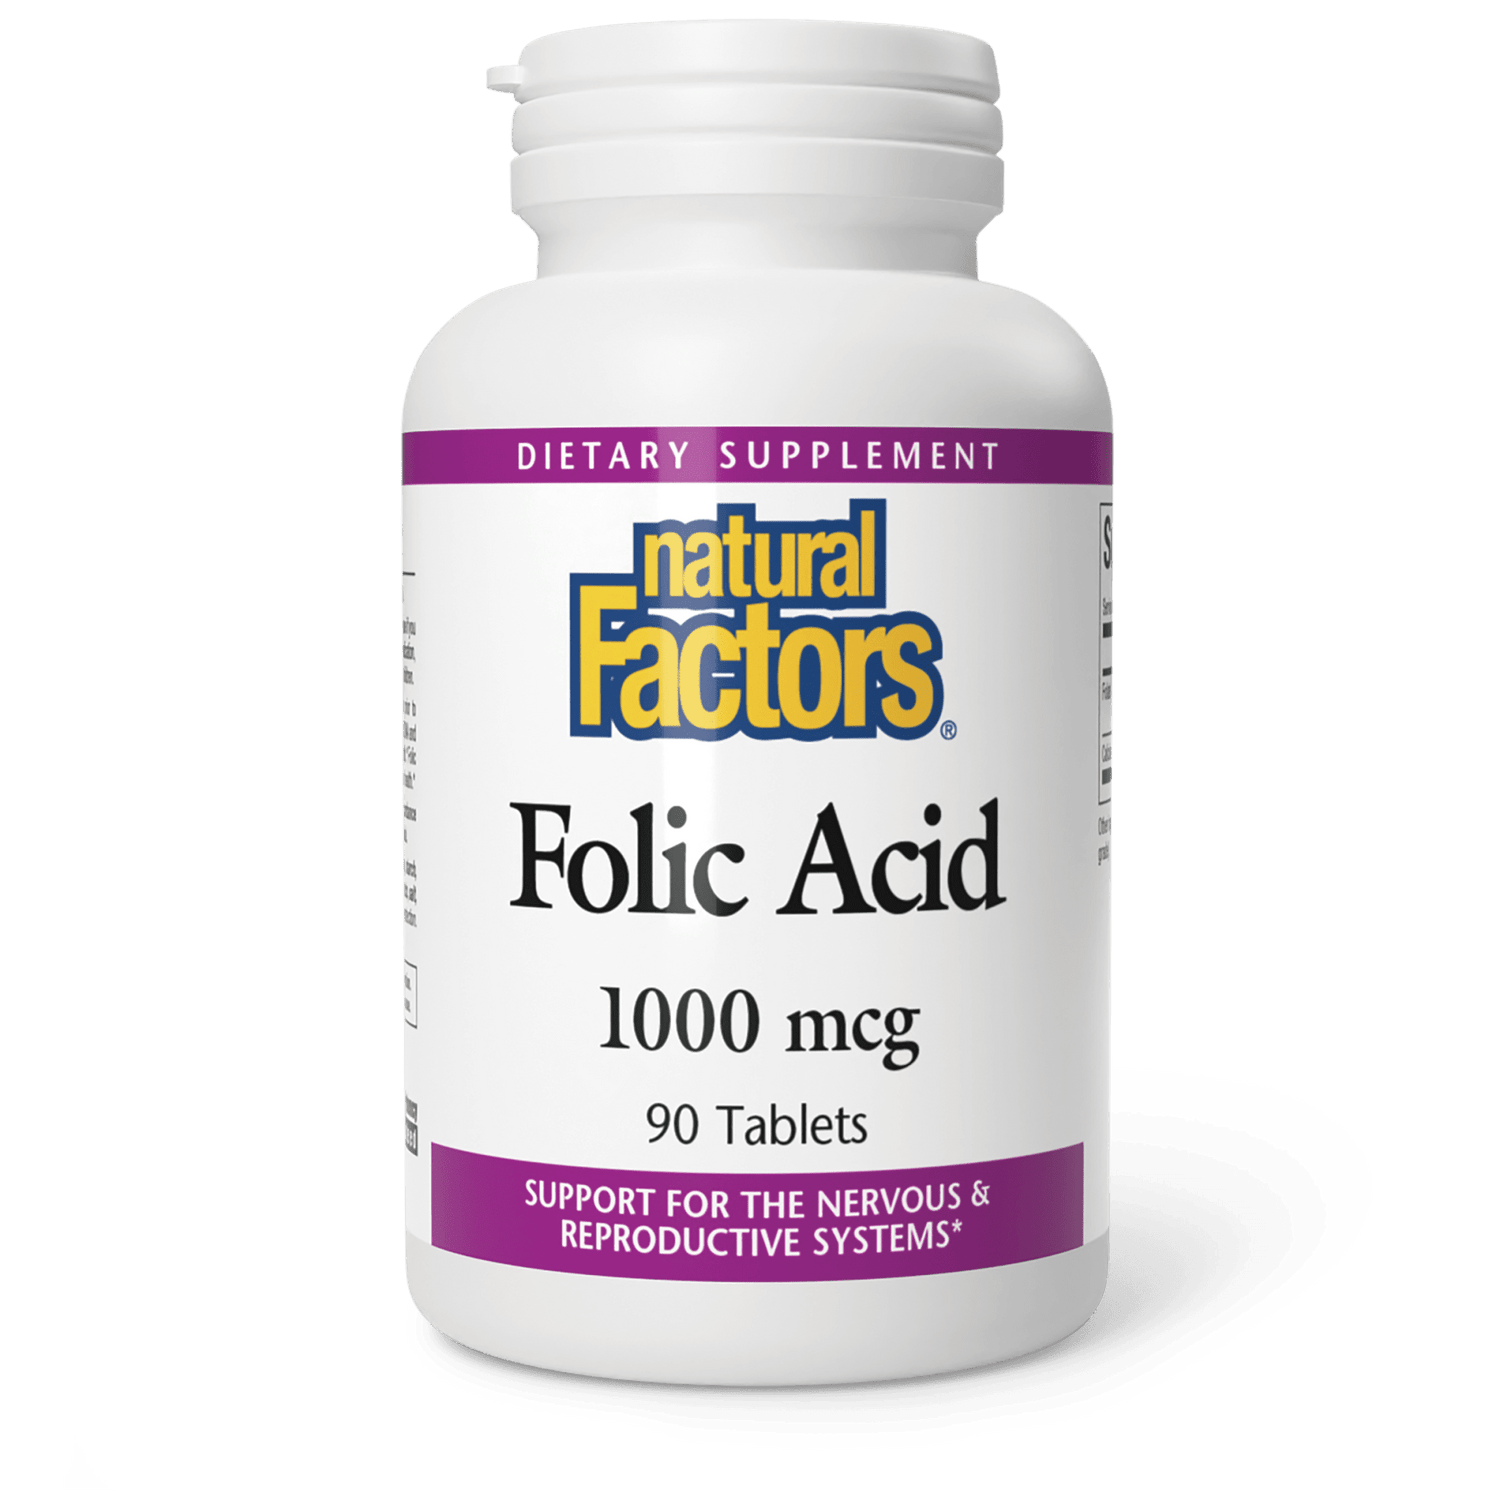 Folic Acid|variant|hi-res|1270U